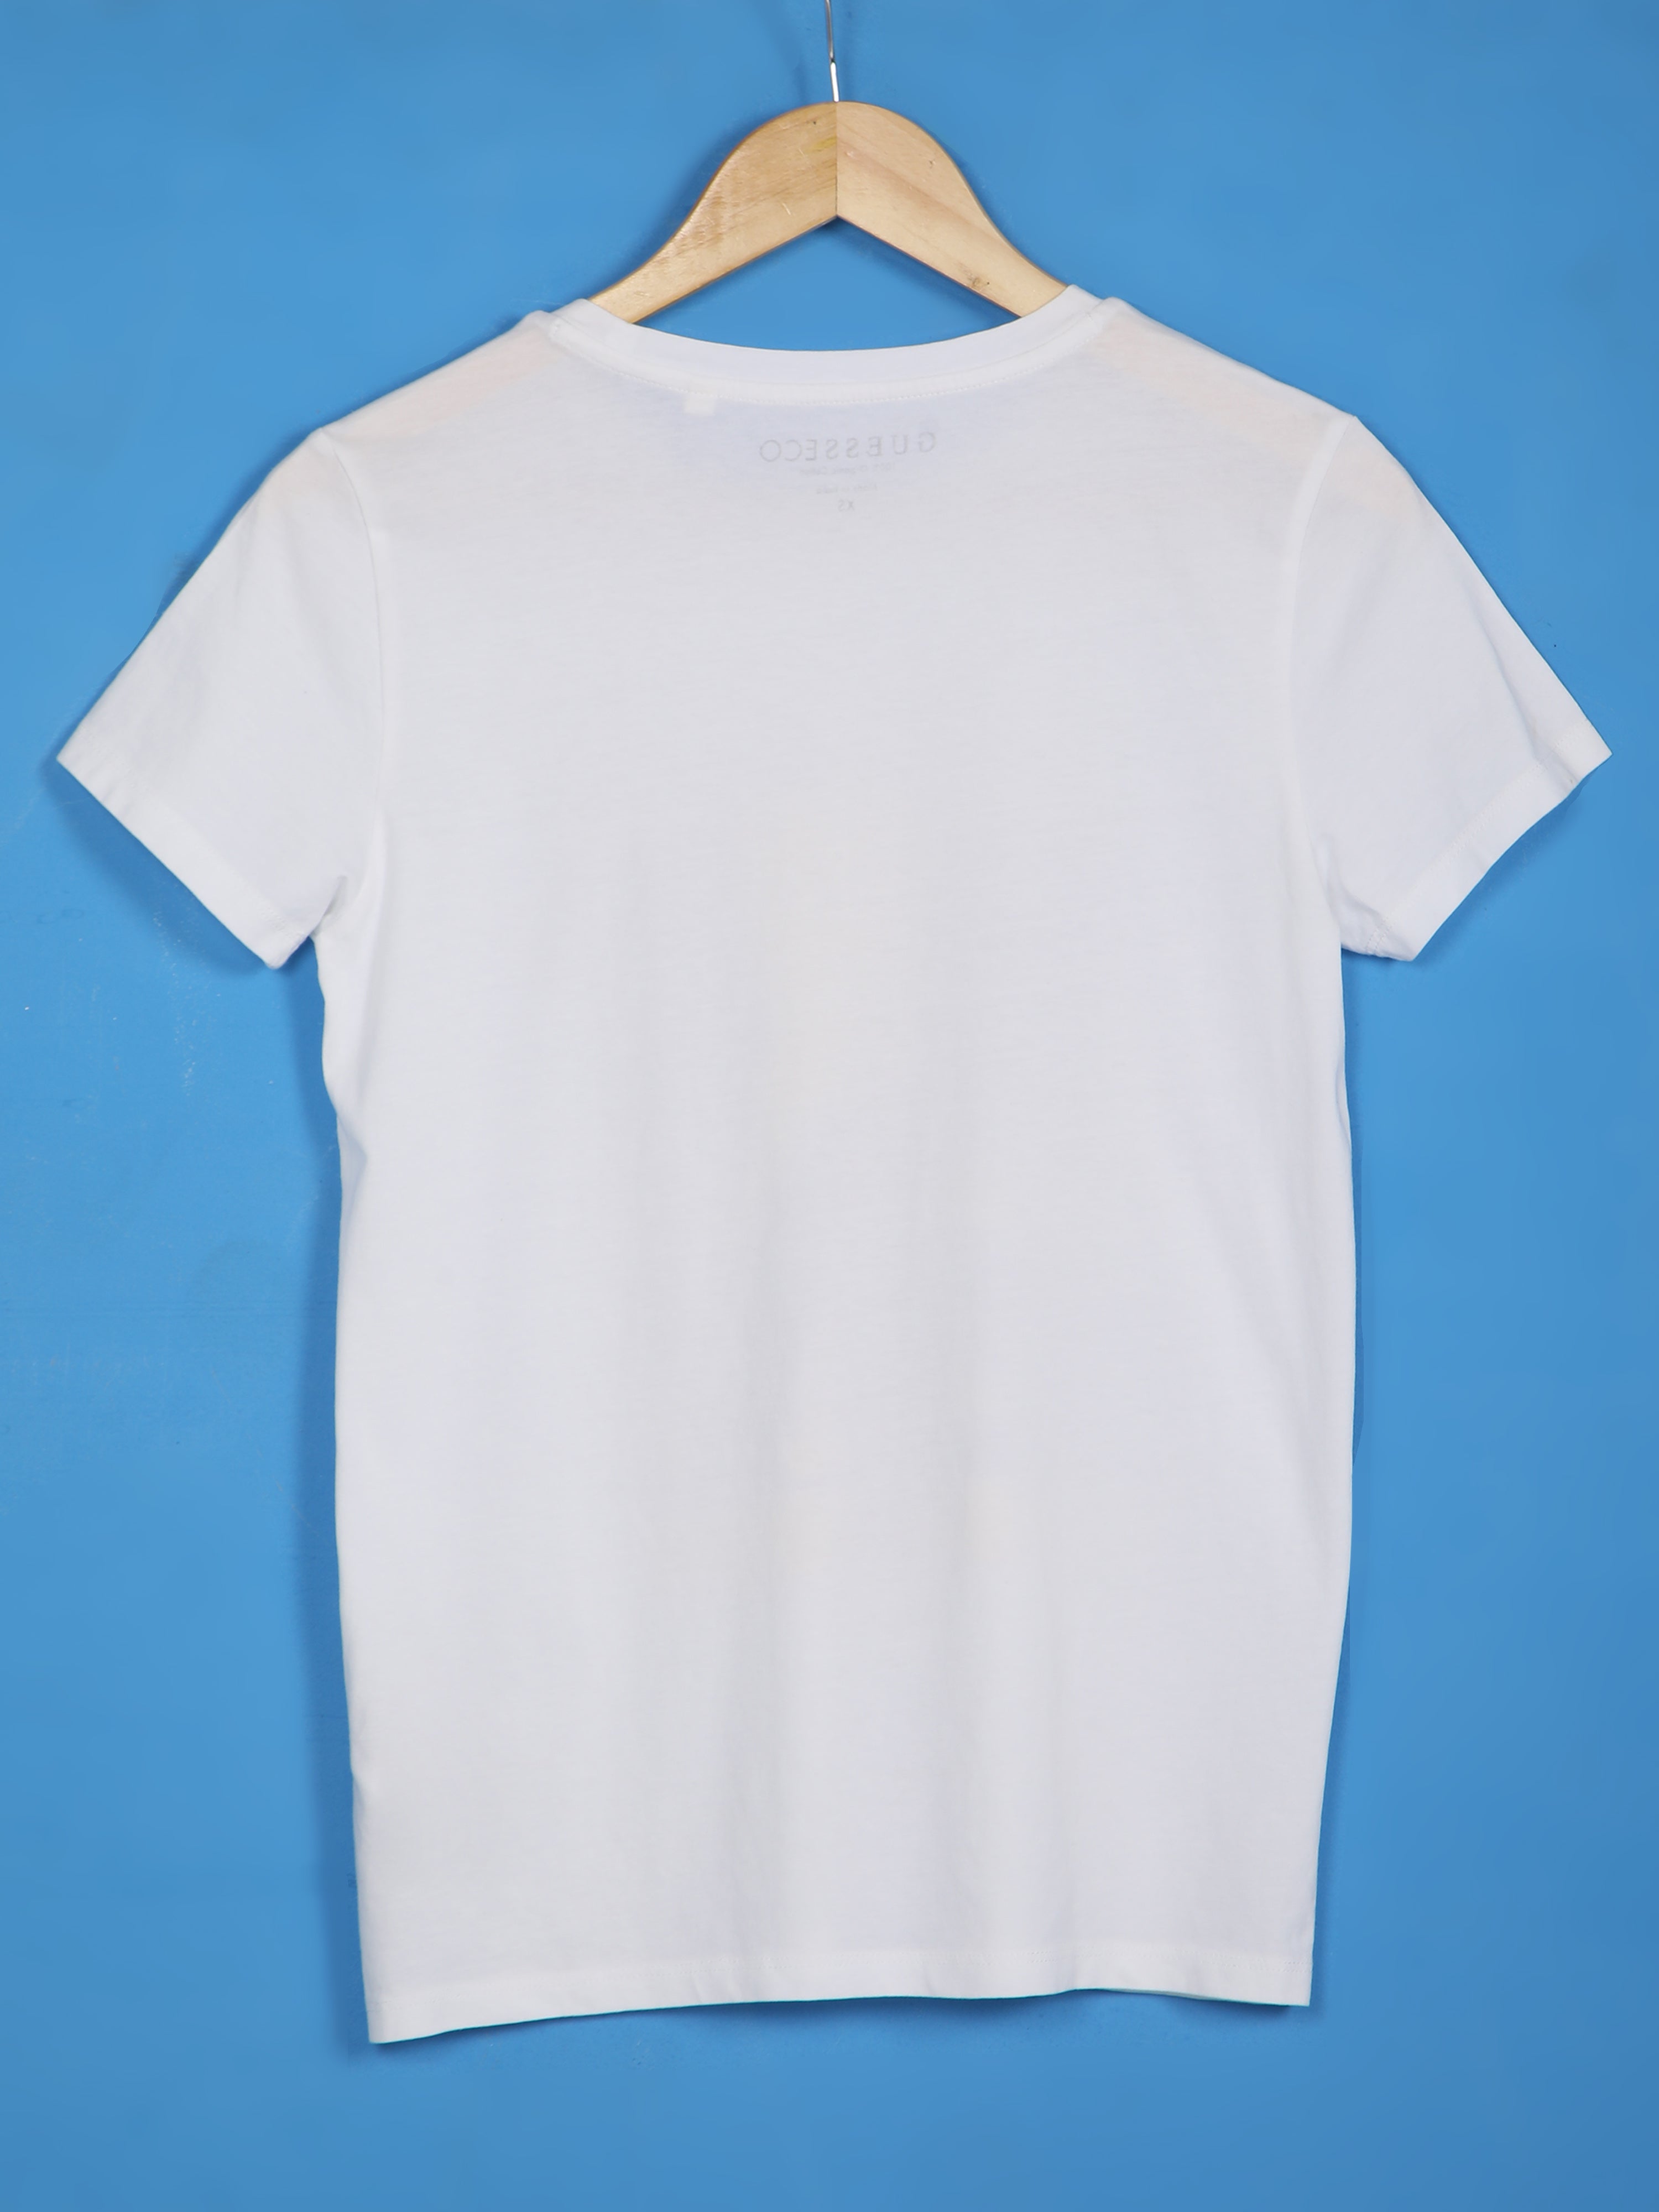 Women's Short Sleeve Digital Printed T-shirt-White,34